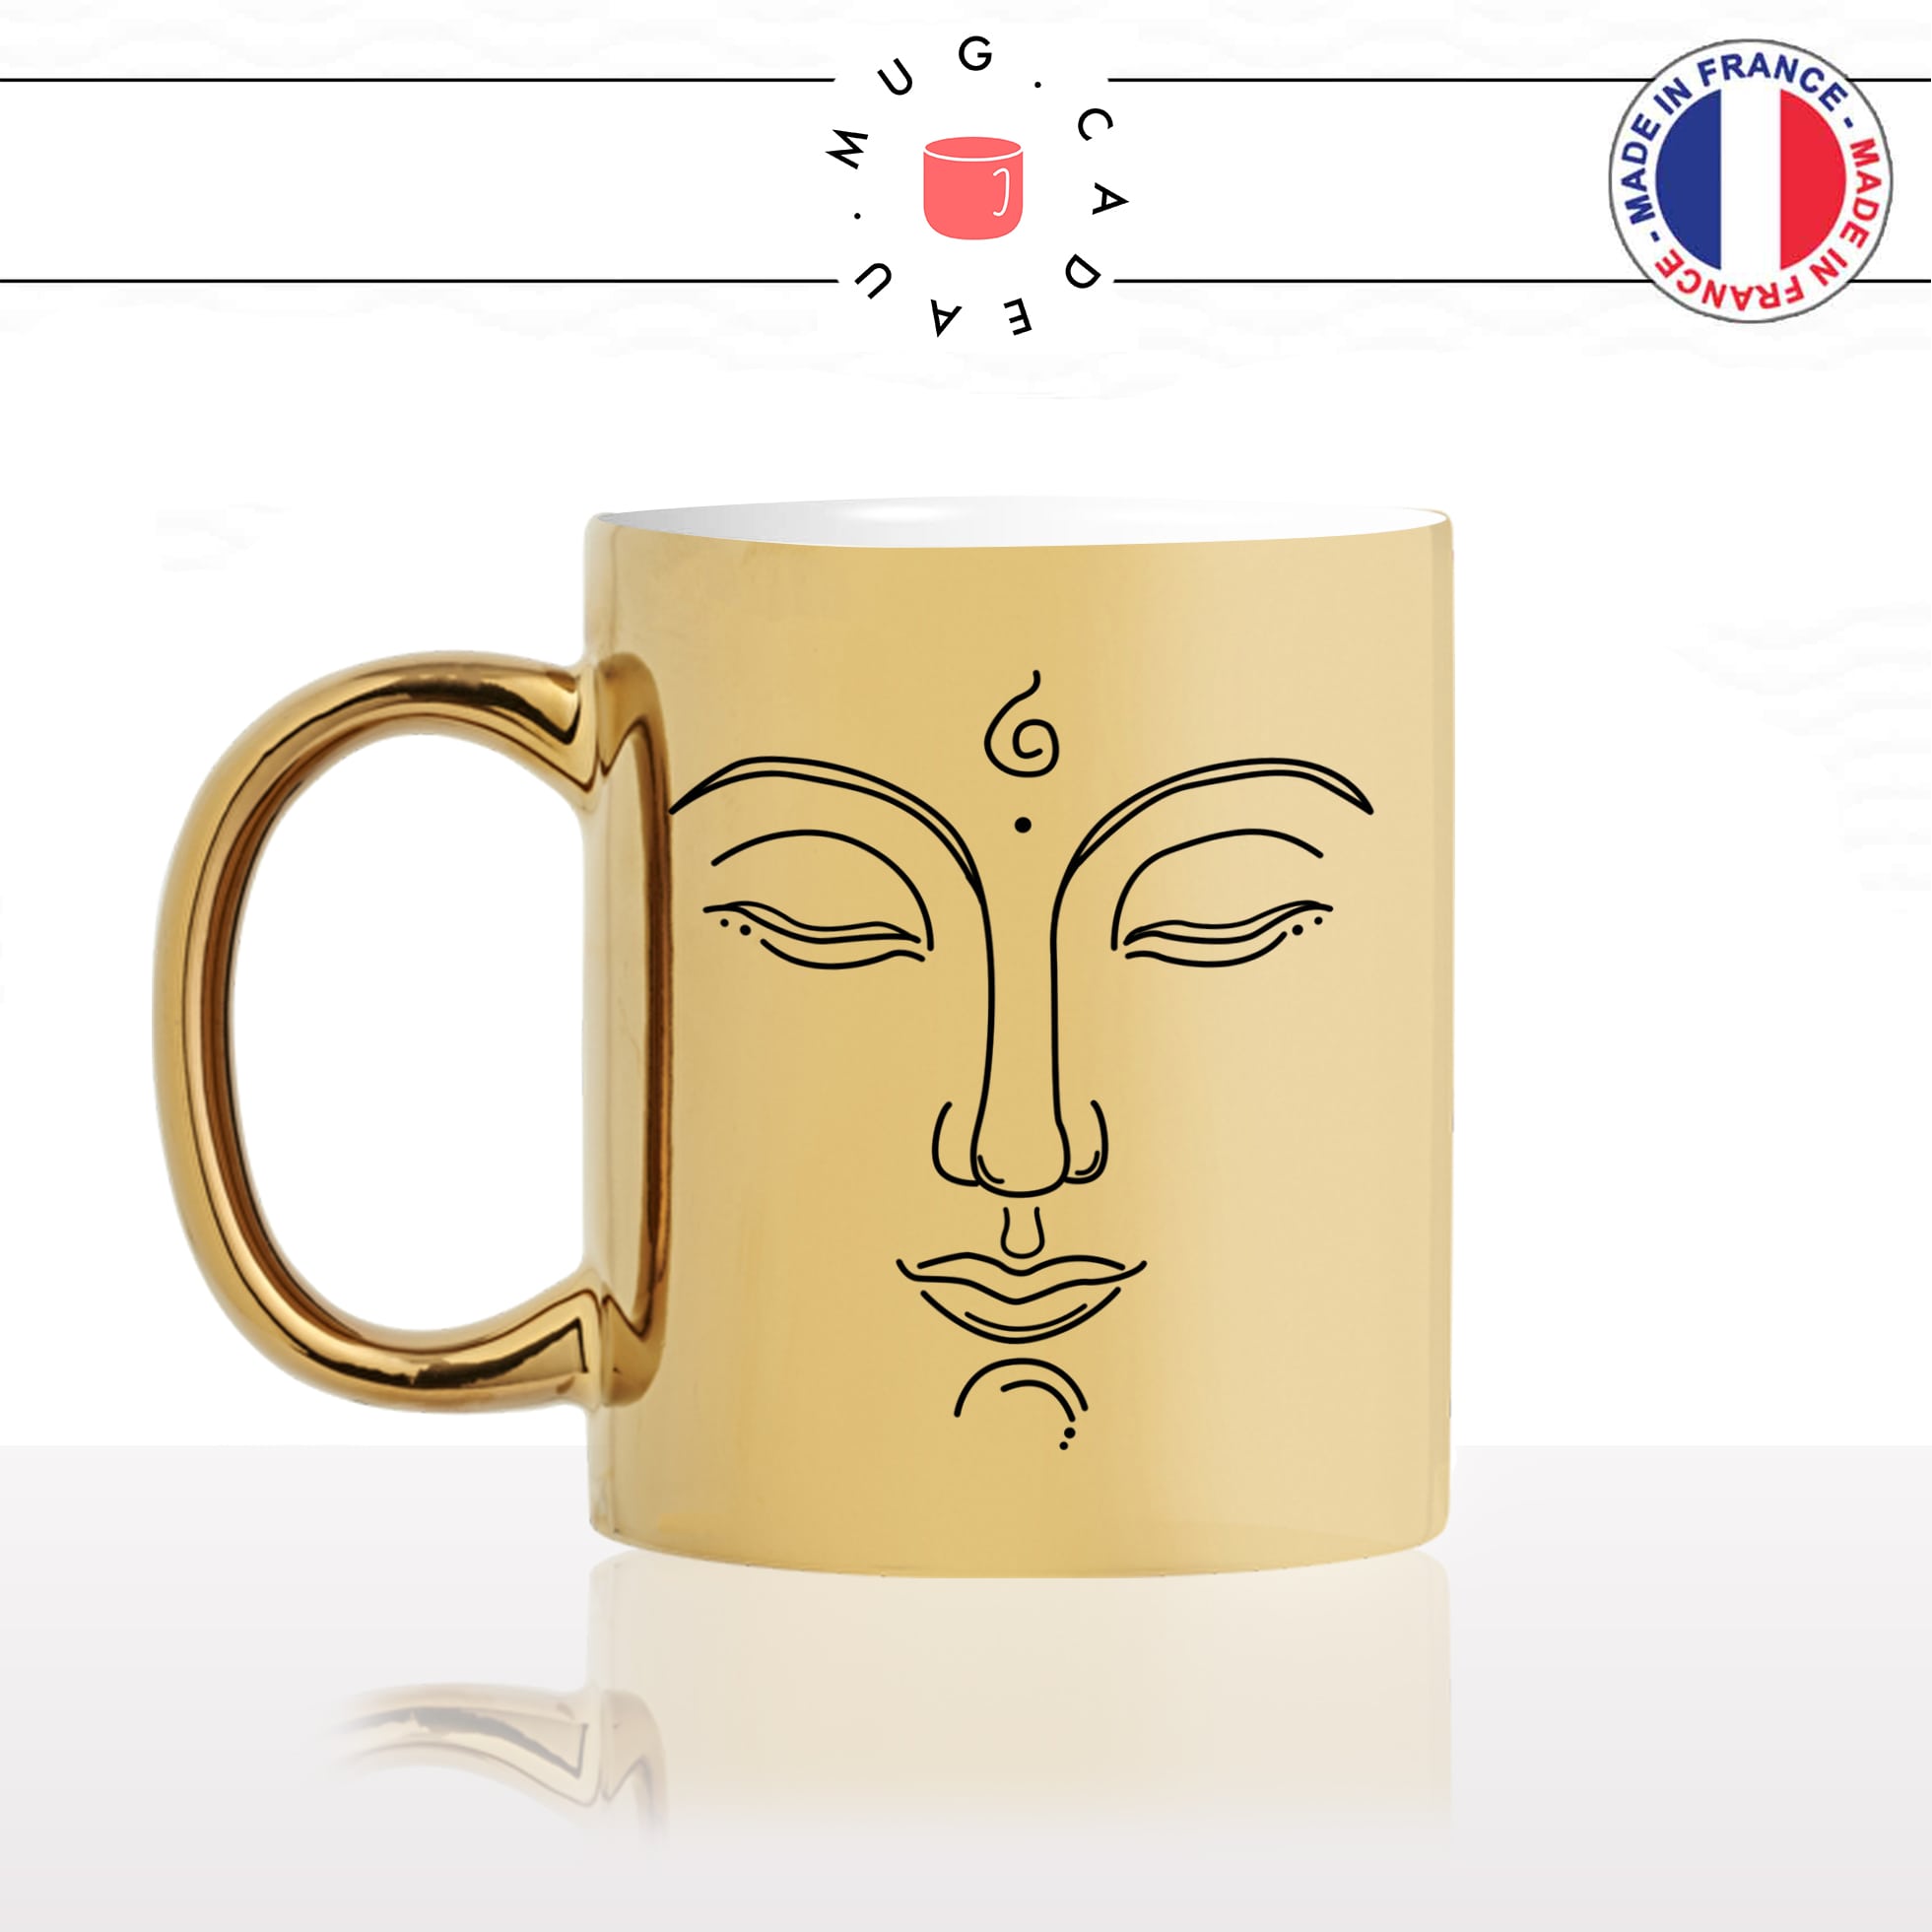 mug-tasse-gold-or-doré-symbol-bouddhiste-visage-bouddha-meditation-yoga-original-dessin-religion-fun-idée-cadeau-personnalisé-café-thé-min